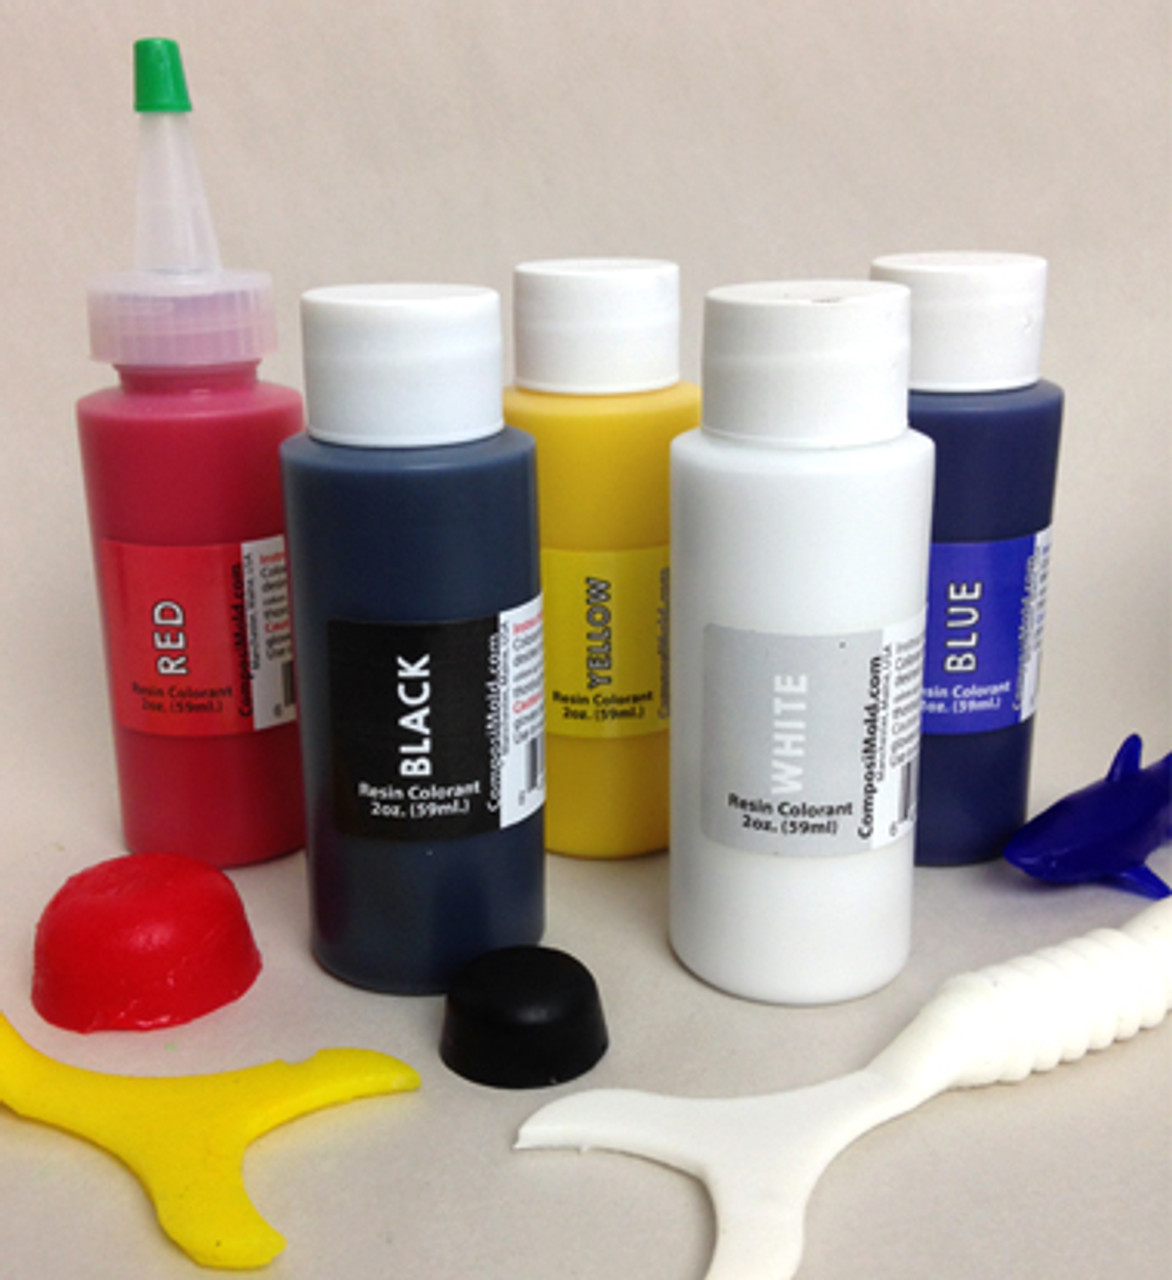 Black Epoxy Pigment (Colorant, Dye, Tint) 6cc (0.2 oz.)